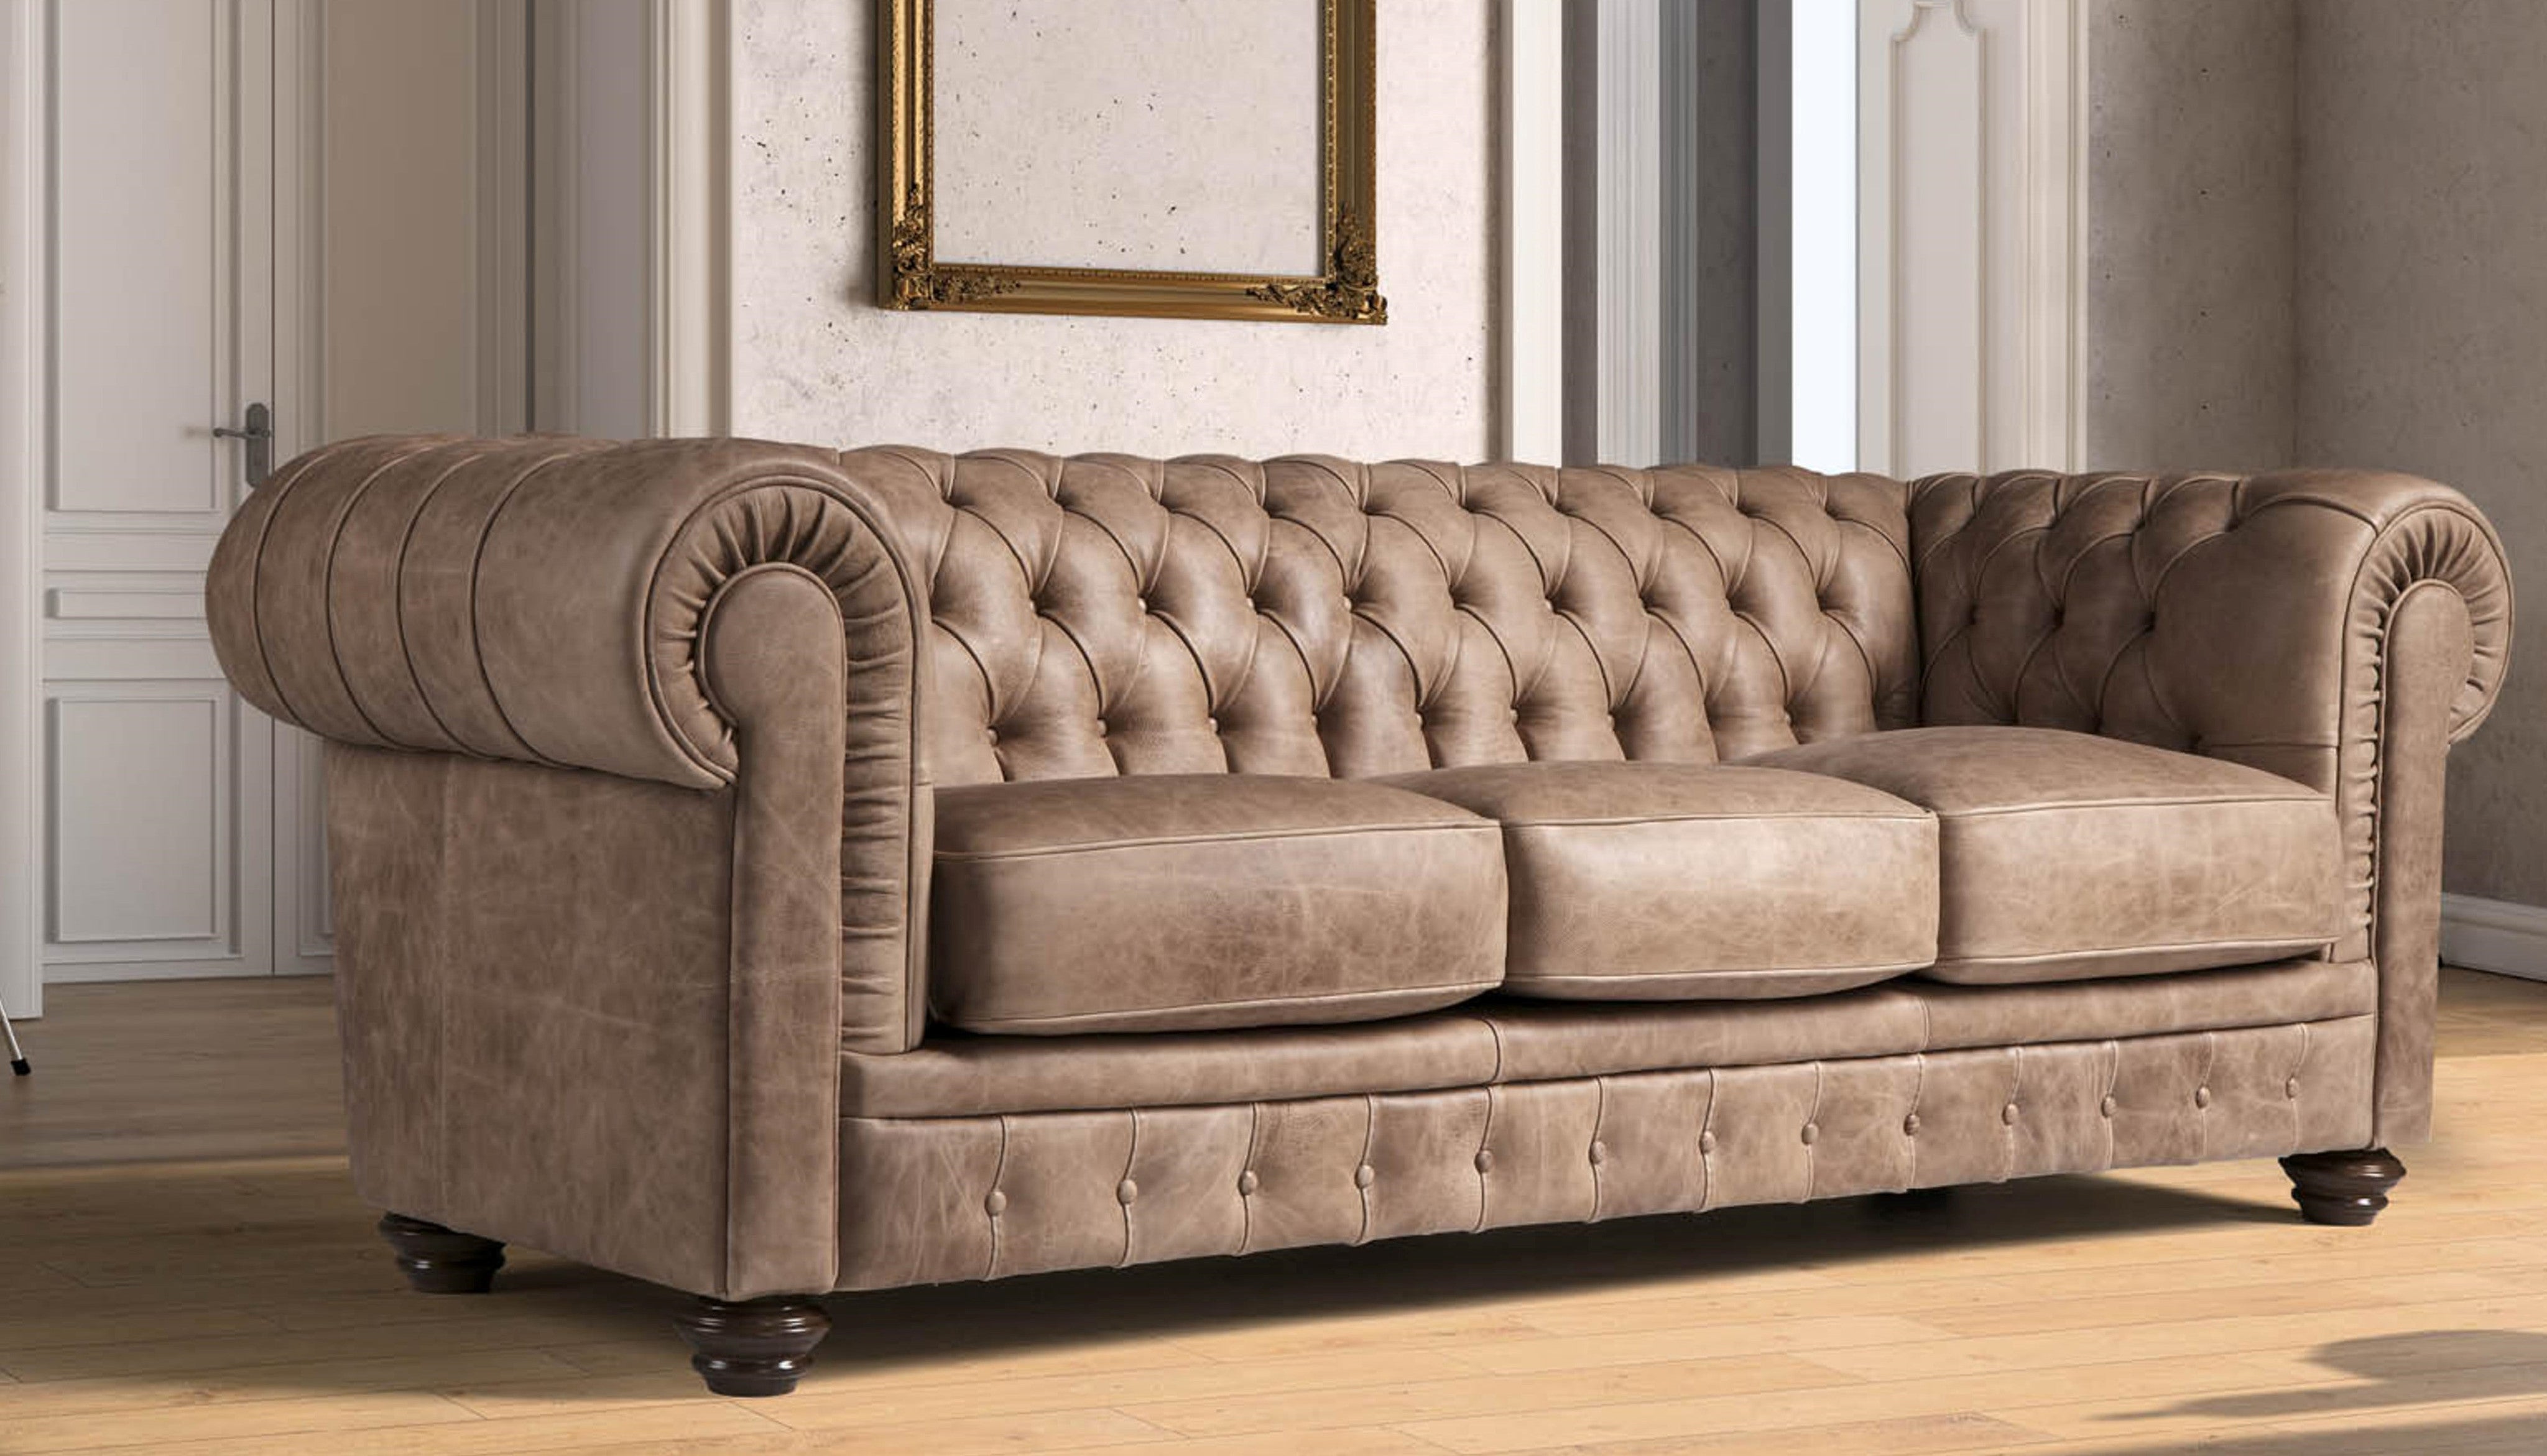 luxury leather living room furniture